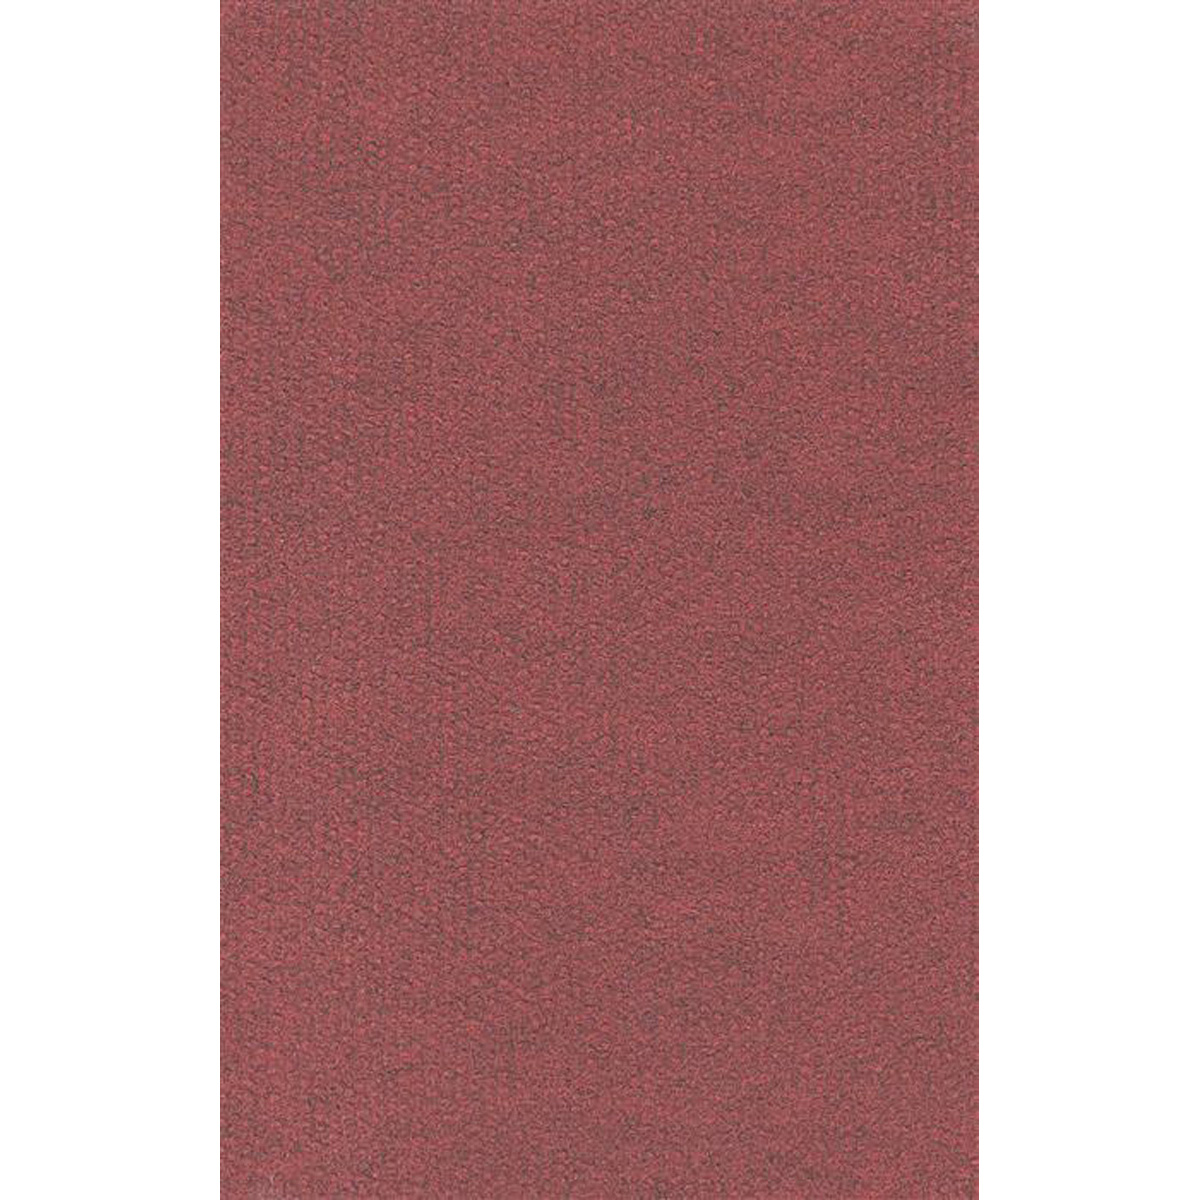 Messetæppe rip/skum 2x35m - Mørk rød-s